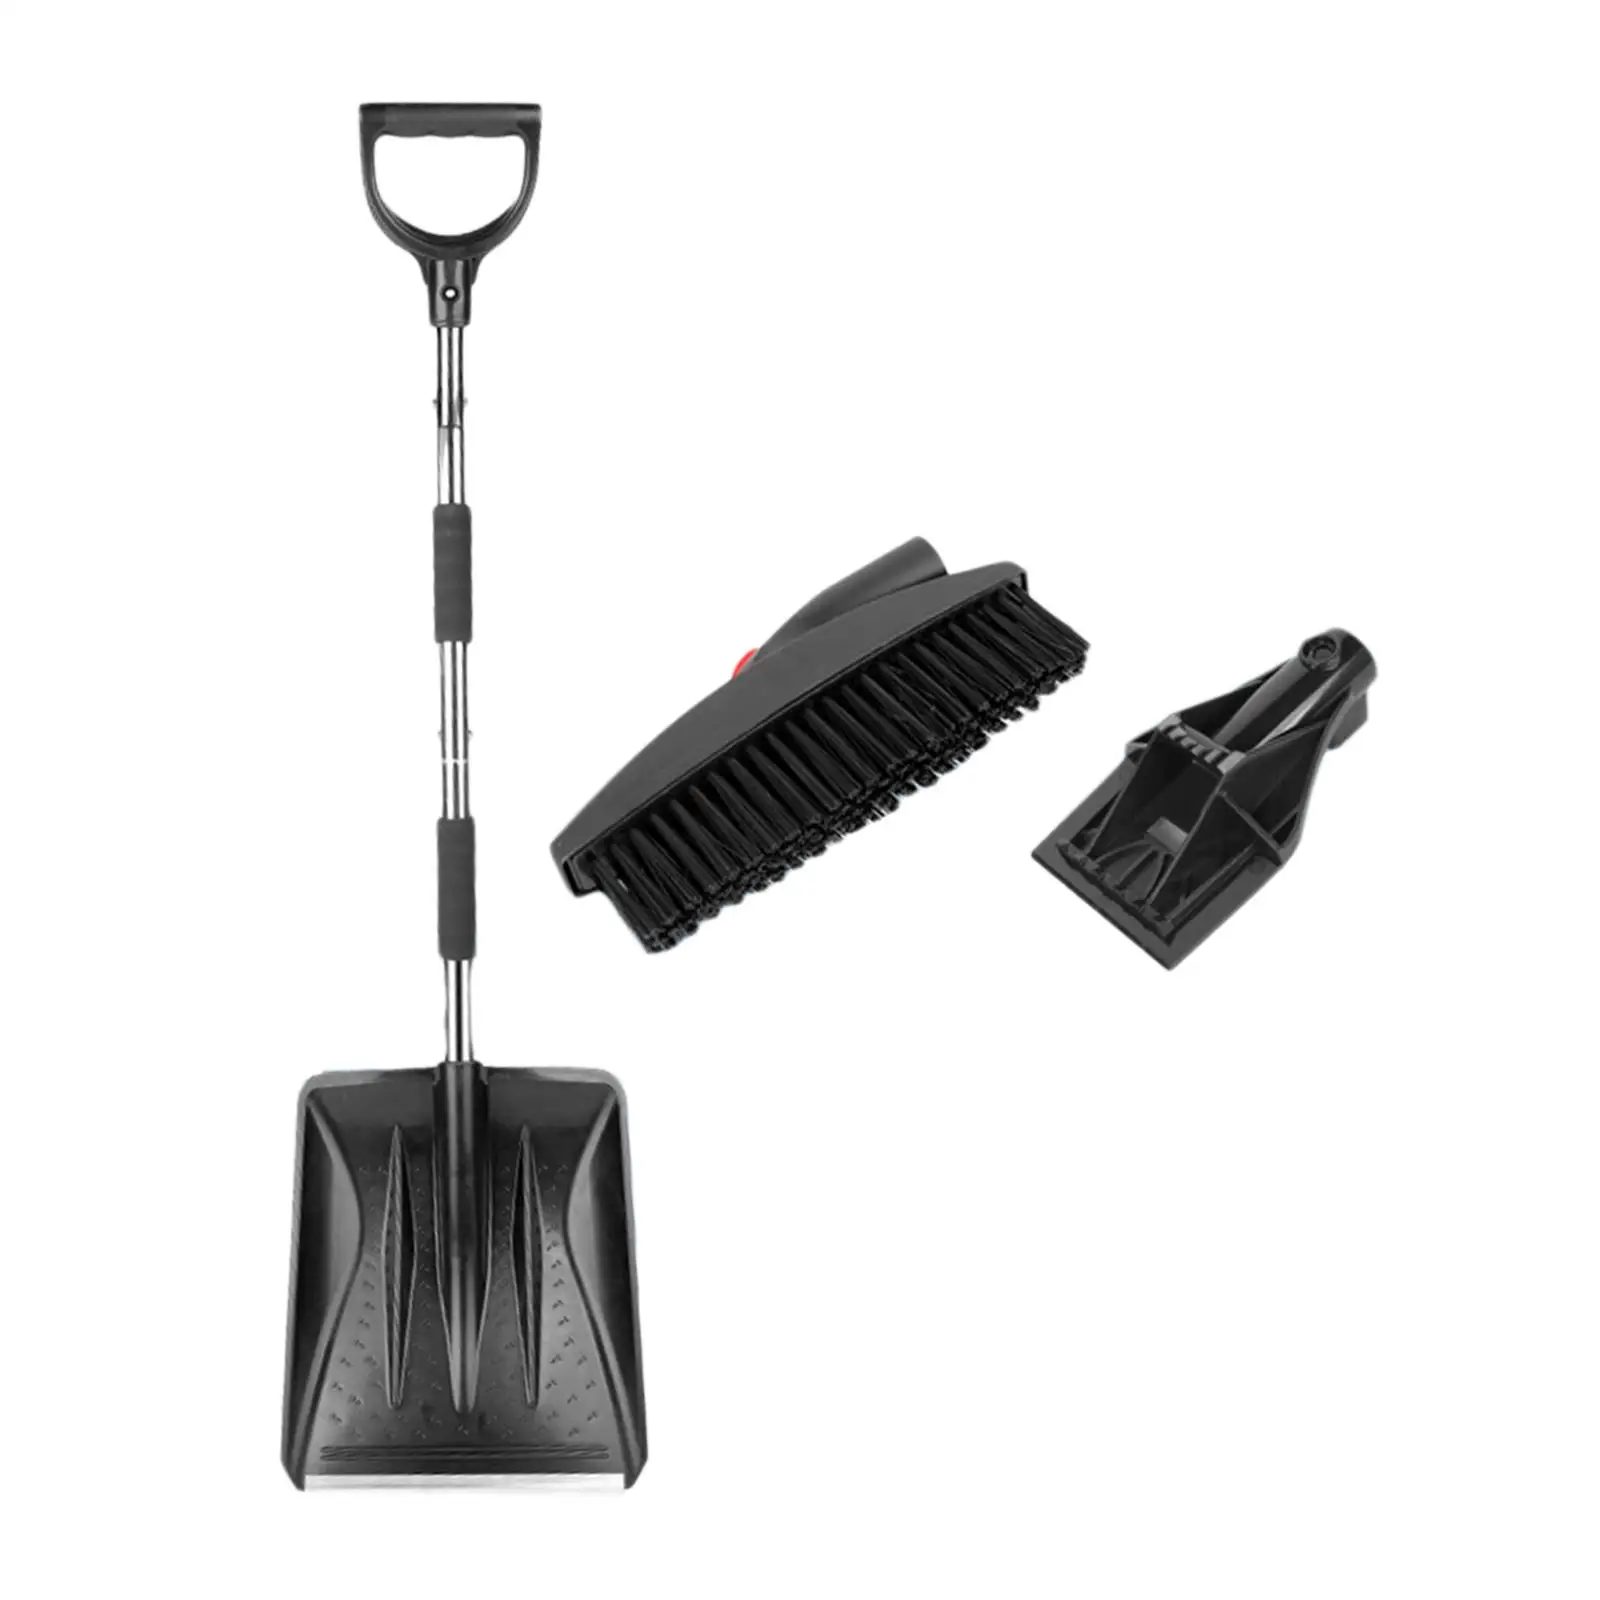 Snow Brush Scraper Snow Shovel for Car Comfortable Gripping Durable Lightweight 3 in 1 Snow Scraper Brush Snow Removal